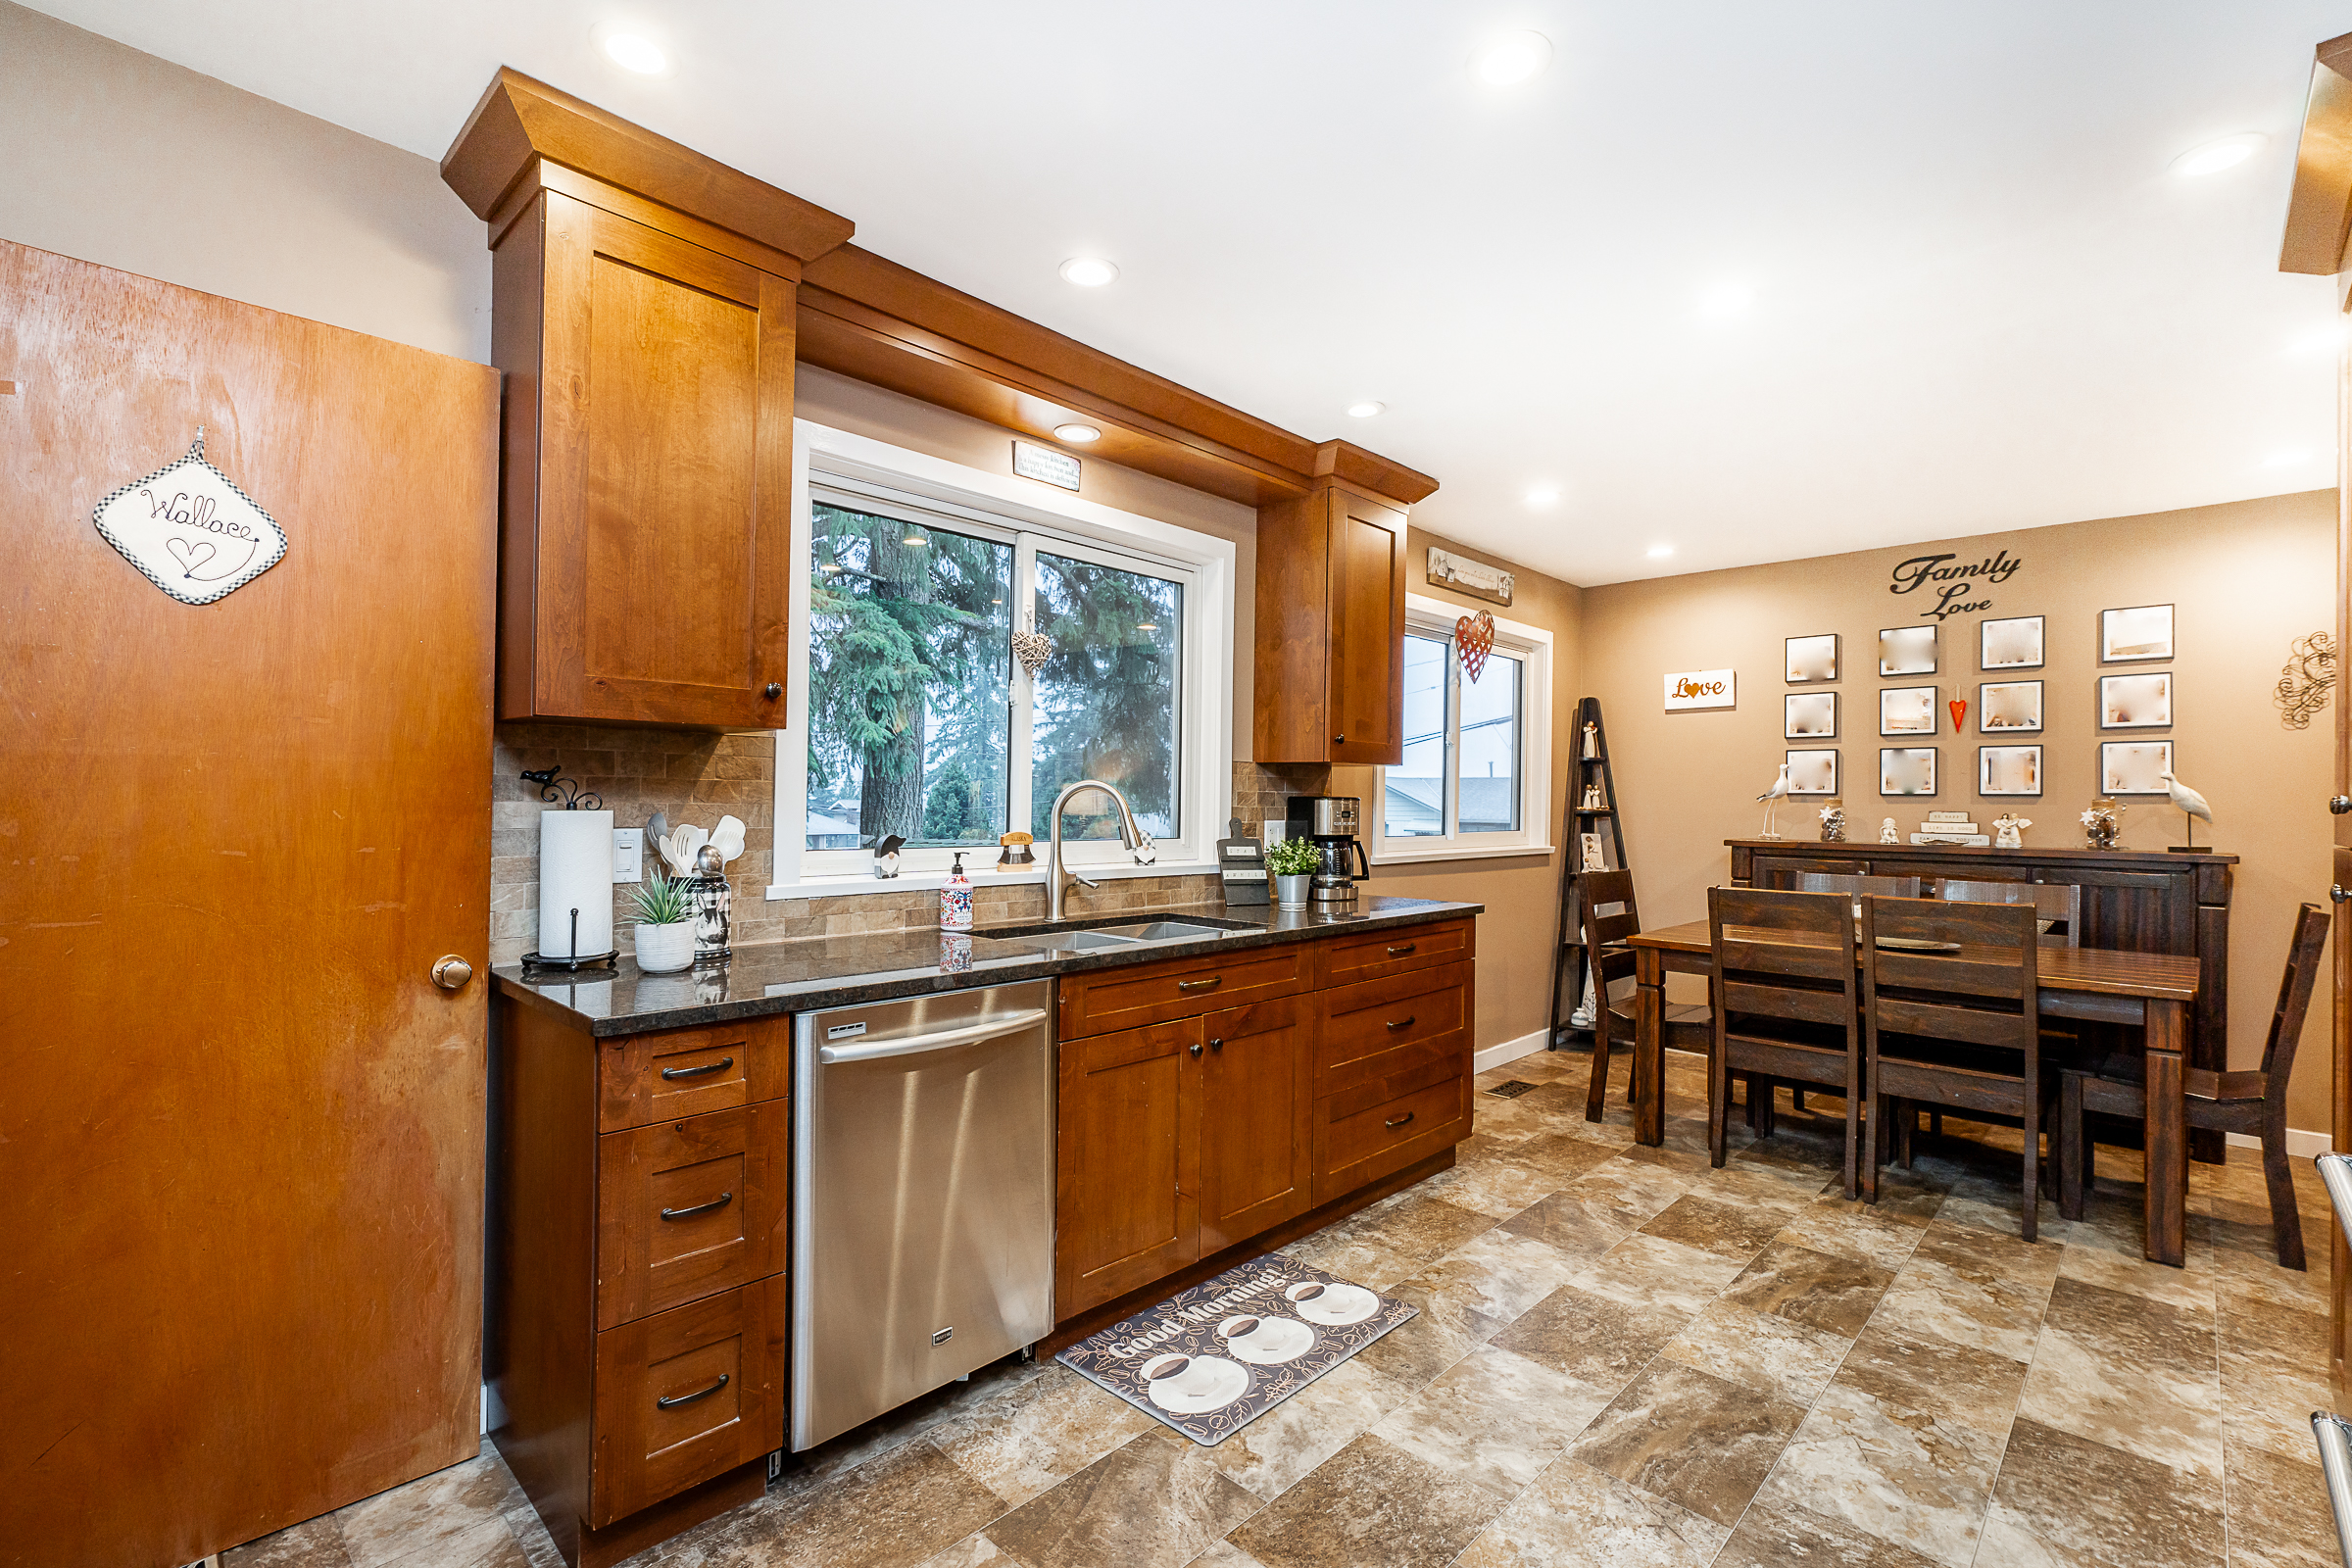 Selling a House in Coquitlam 2260 Portage Avenue Coquitlam #1 Best Coquitlam Realtor Krista Lapp